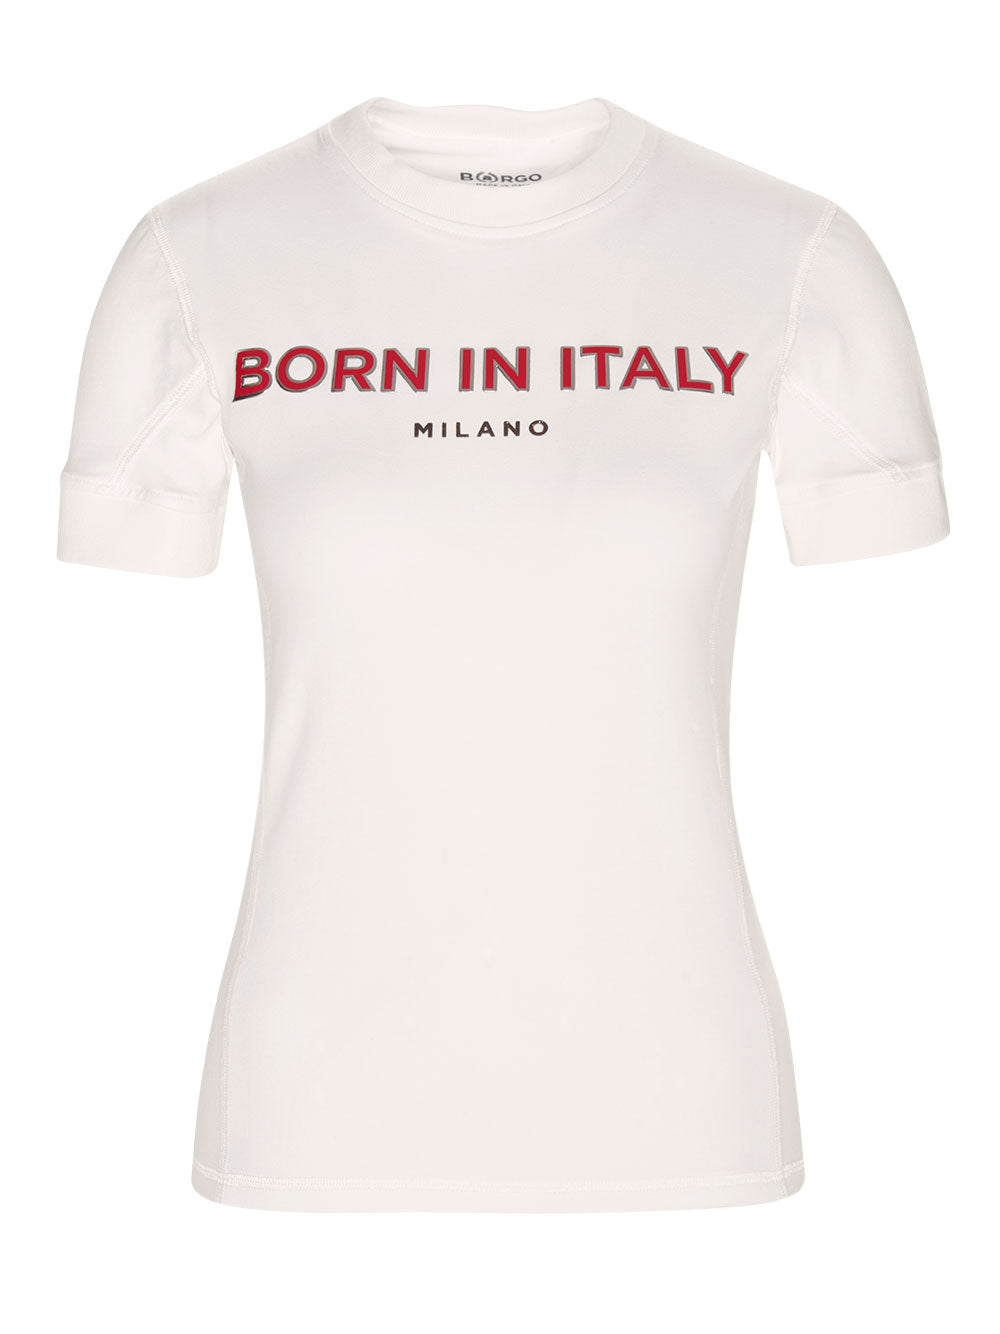 BORGO Fiorano Bianco T-Shirt